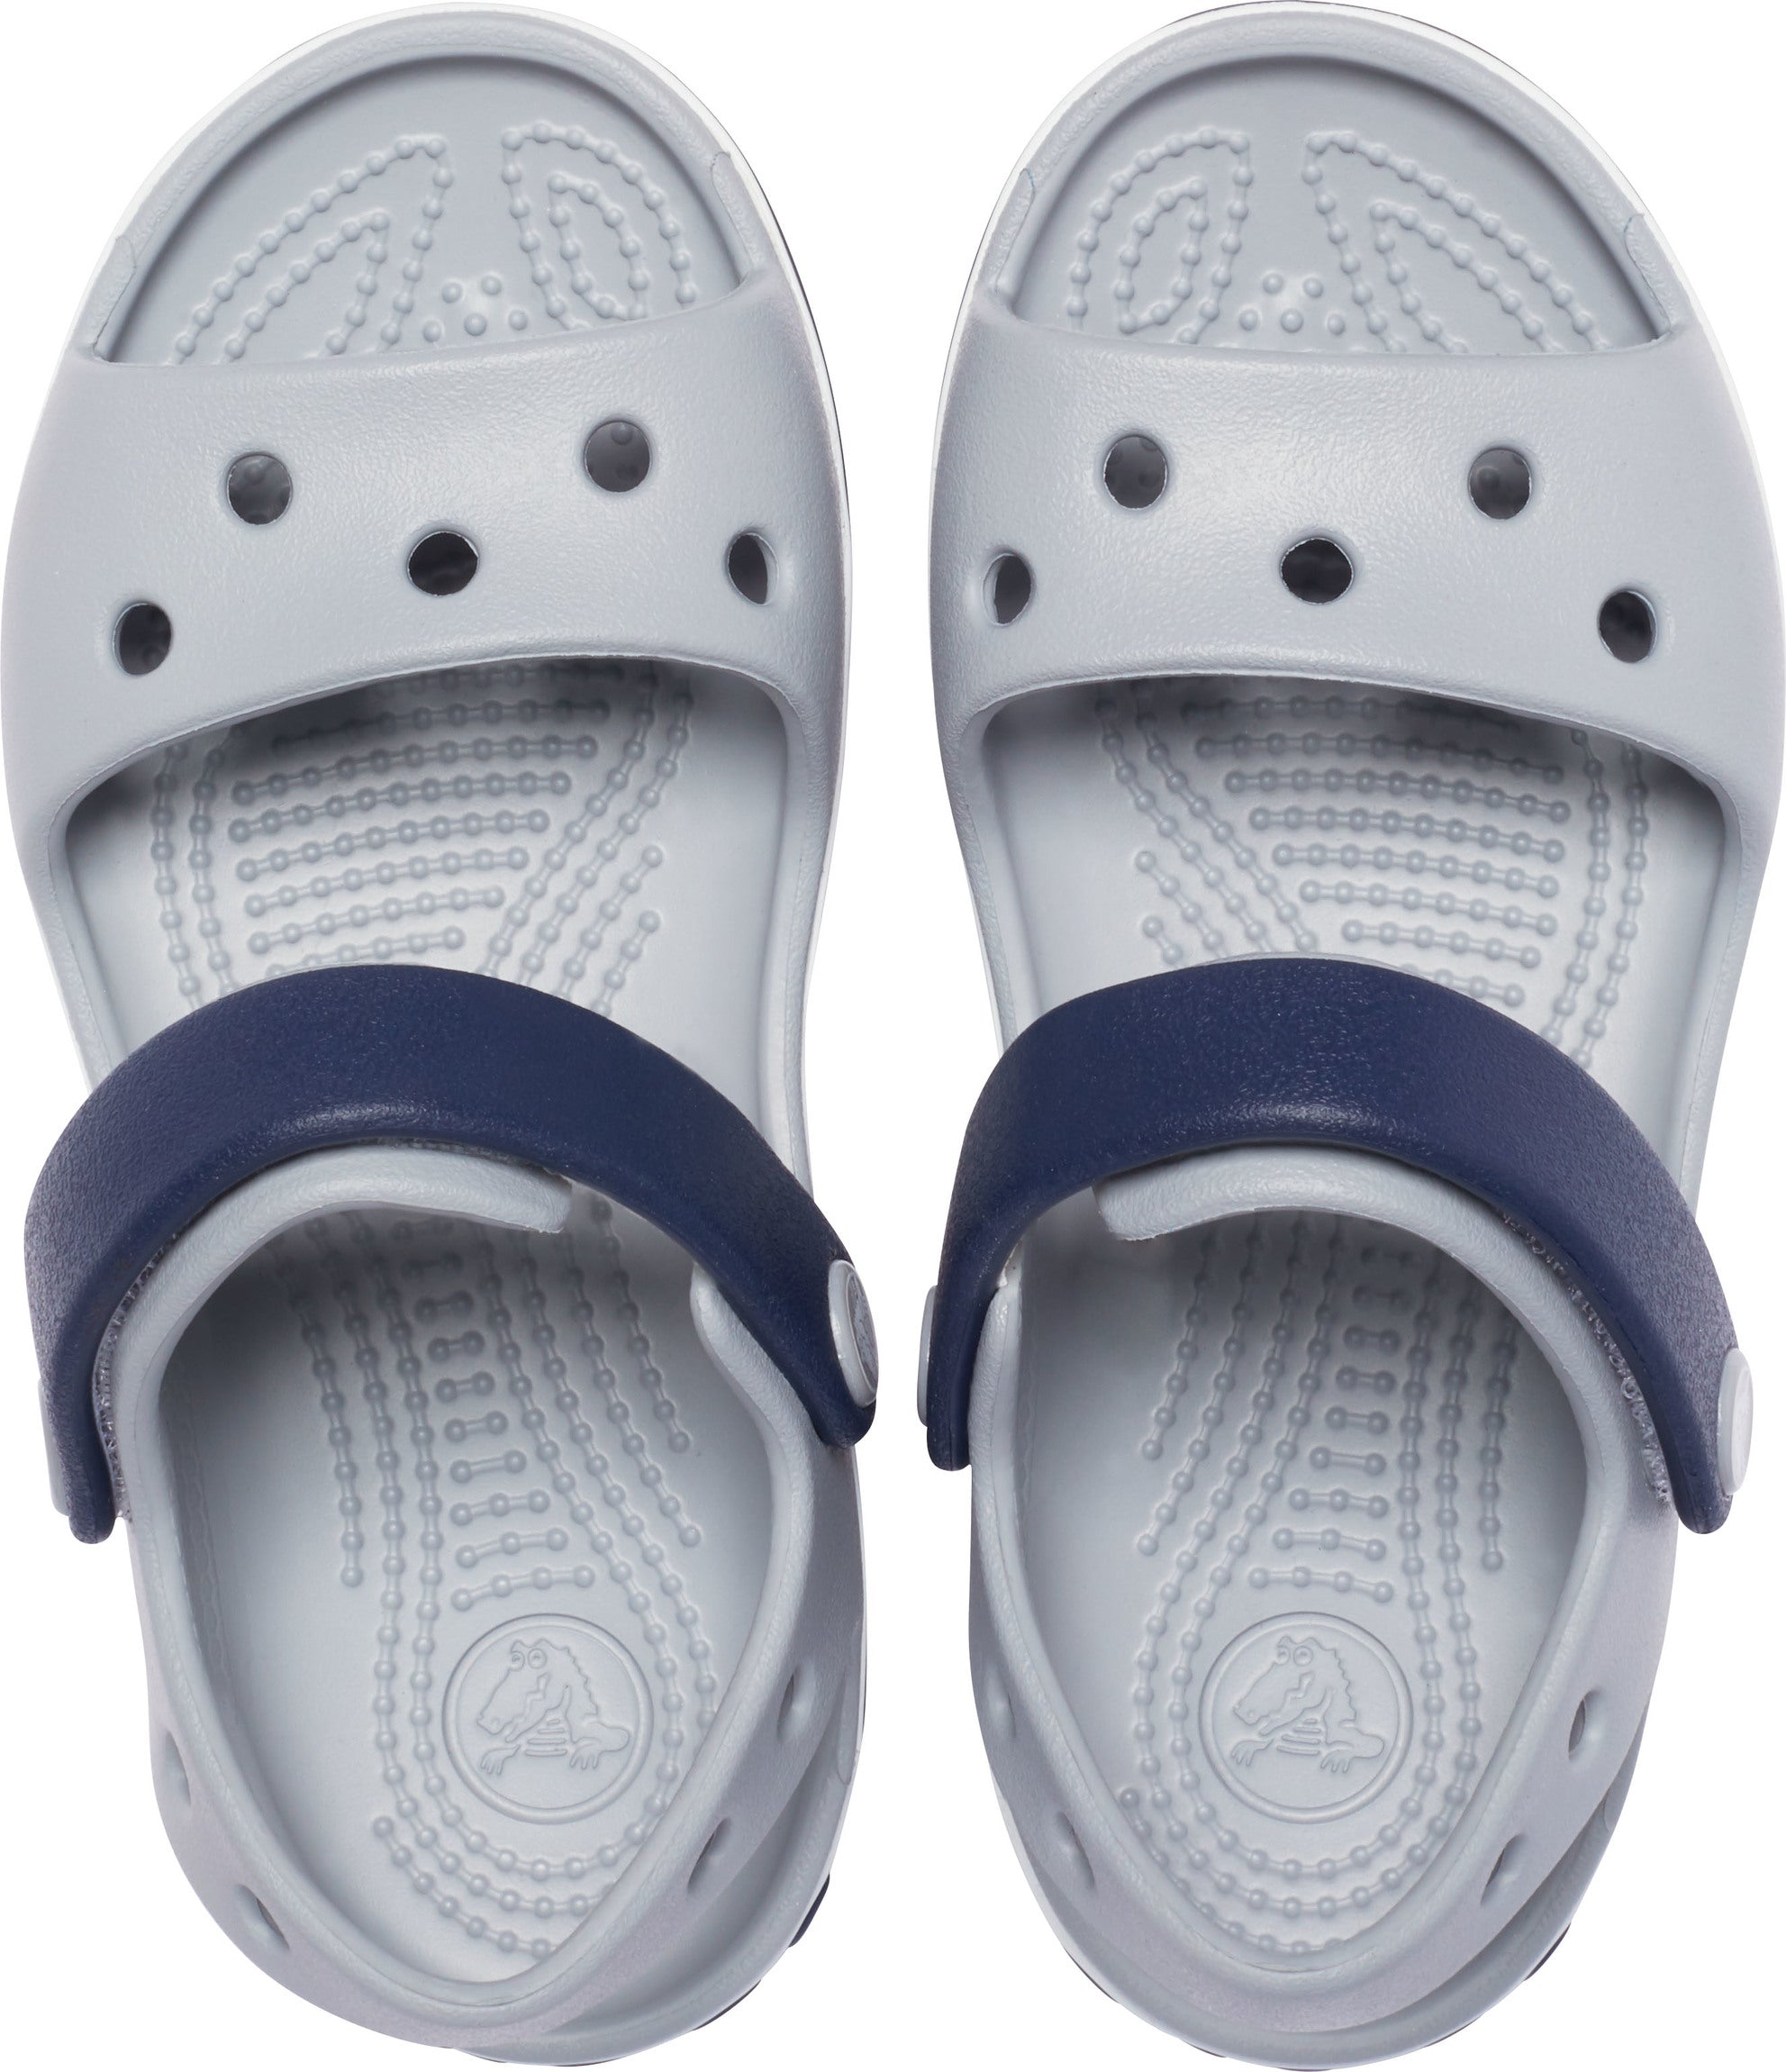 Crocband Sandal Kids Lgr/Navy